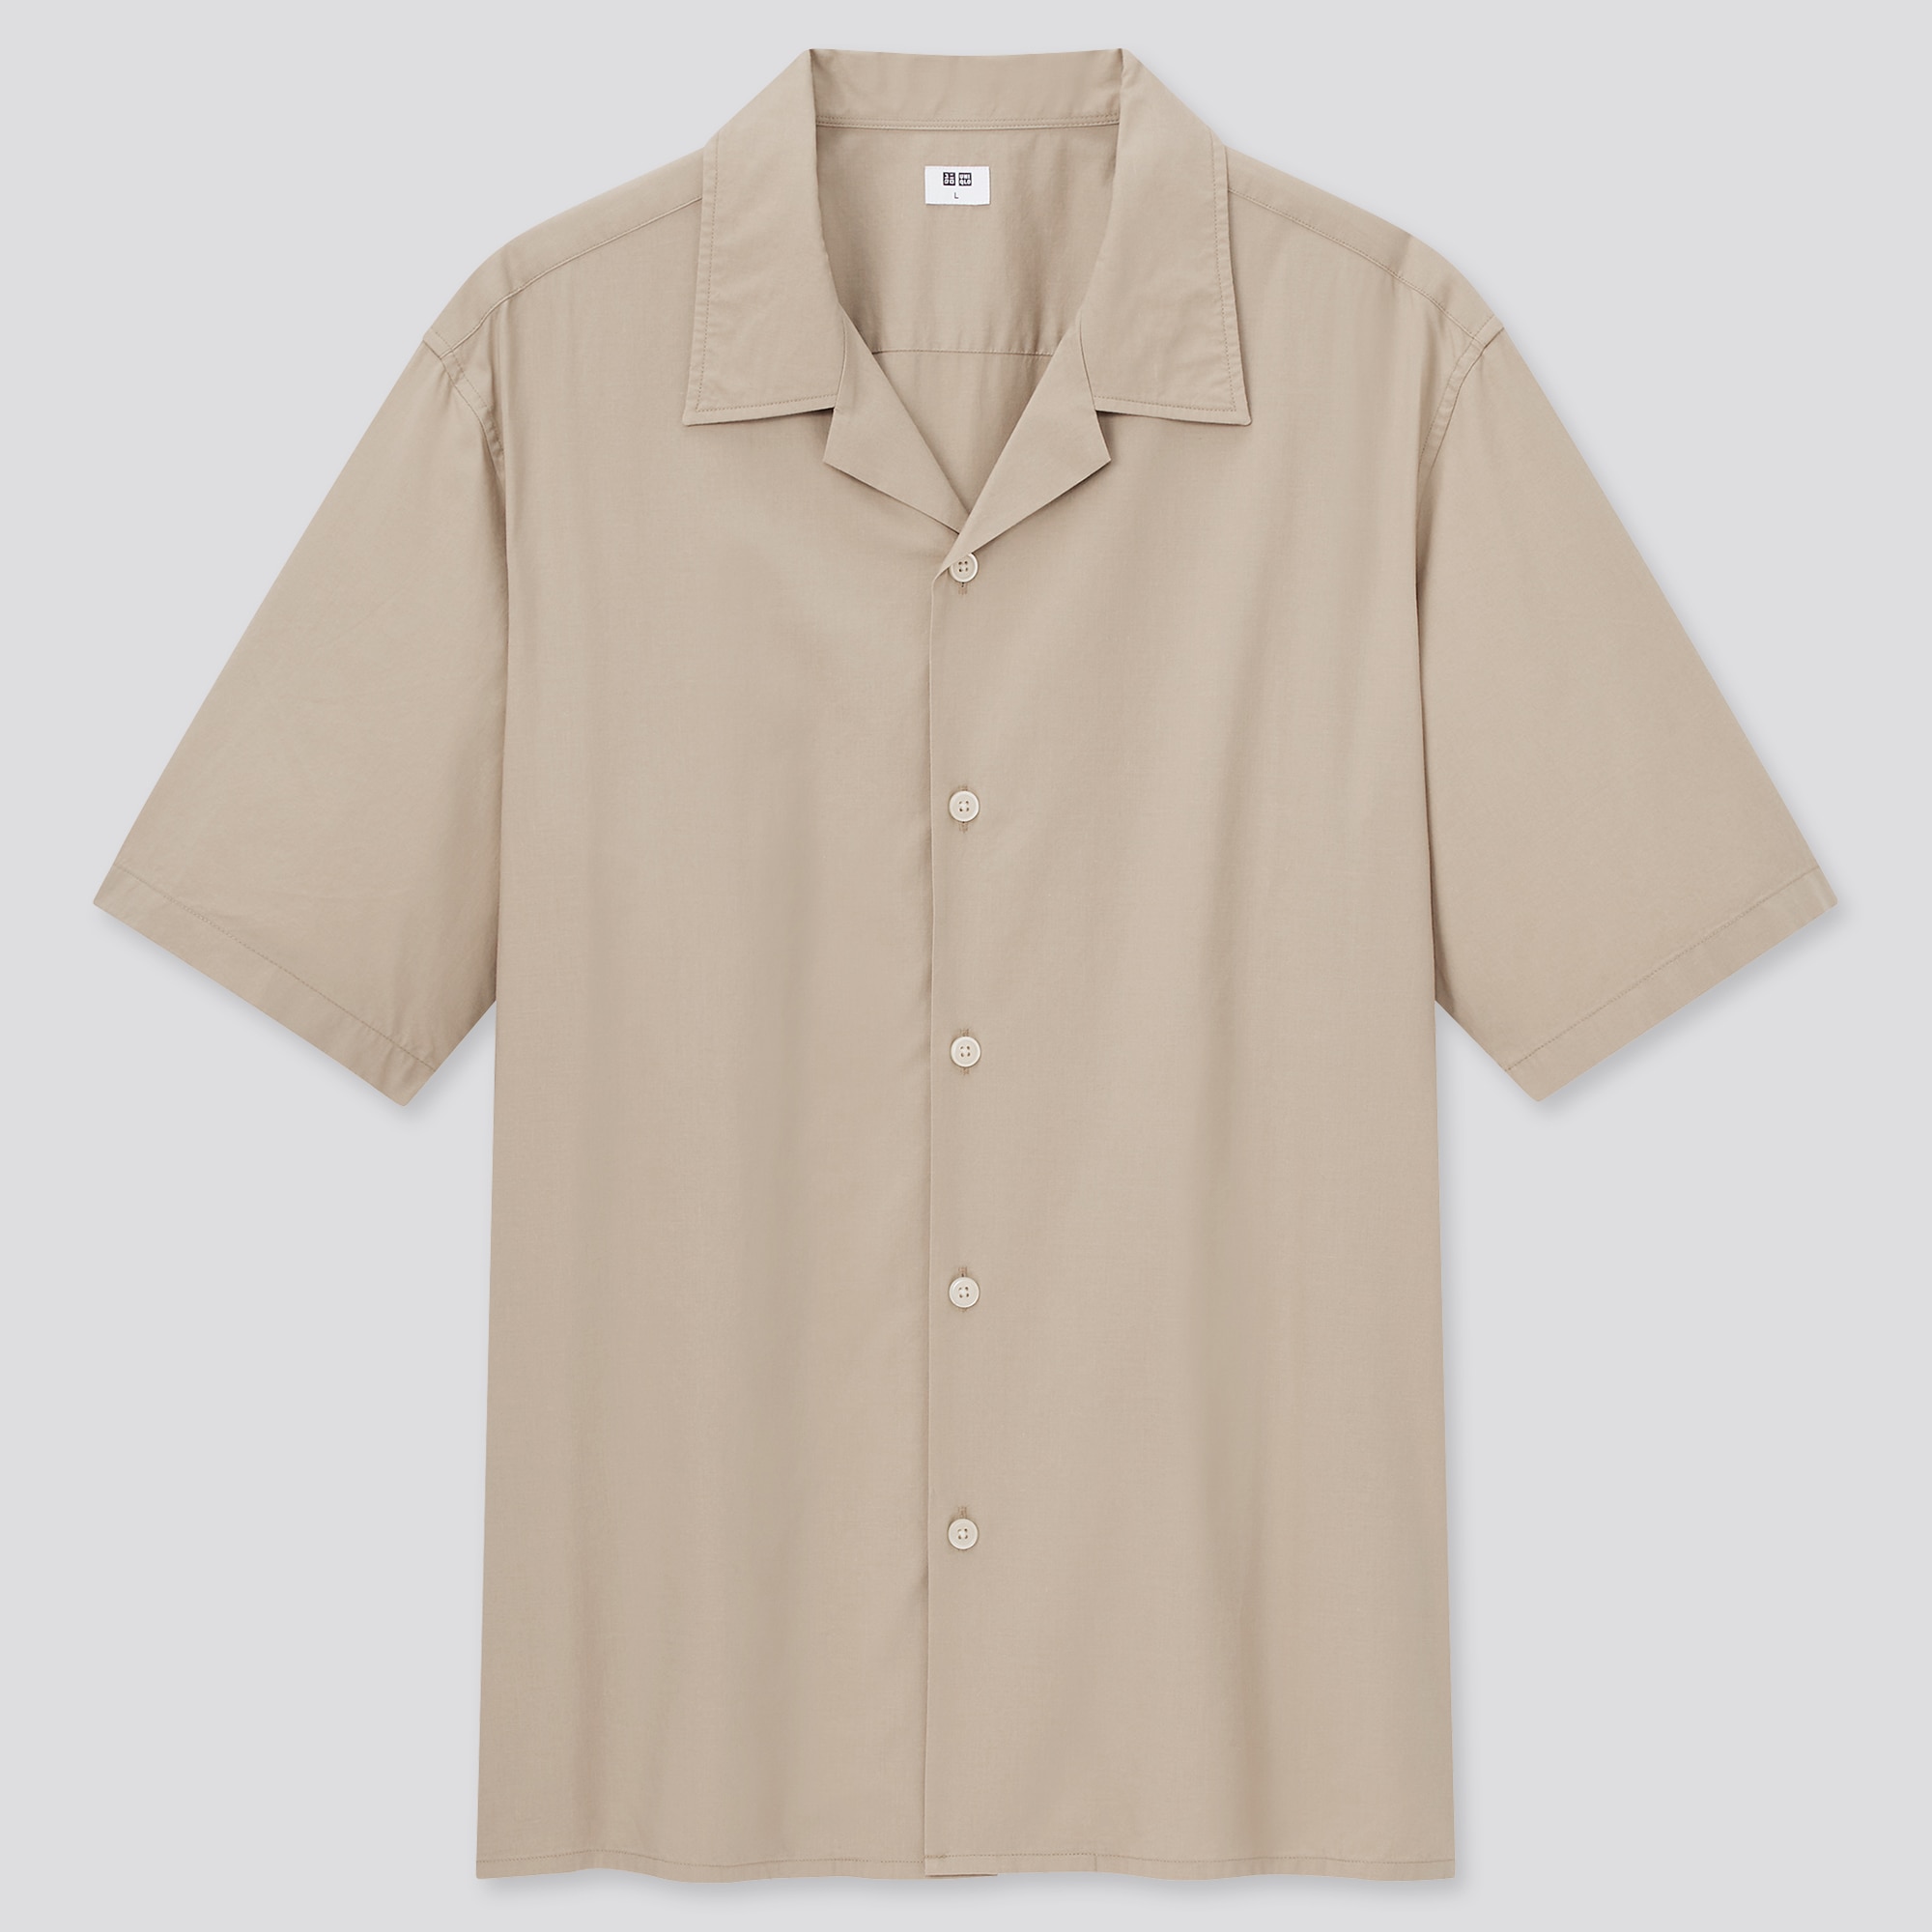 Uniqlo Camp Collar Shirt Review - Uniqlo Open Collar Shirt Endorsement